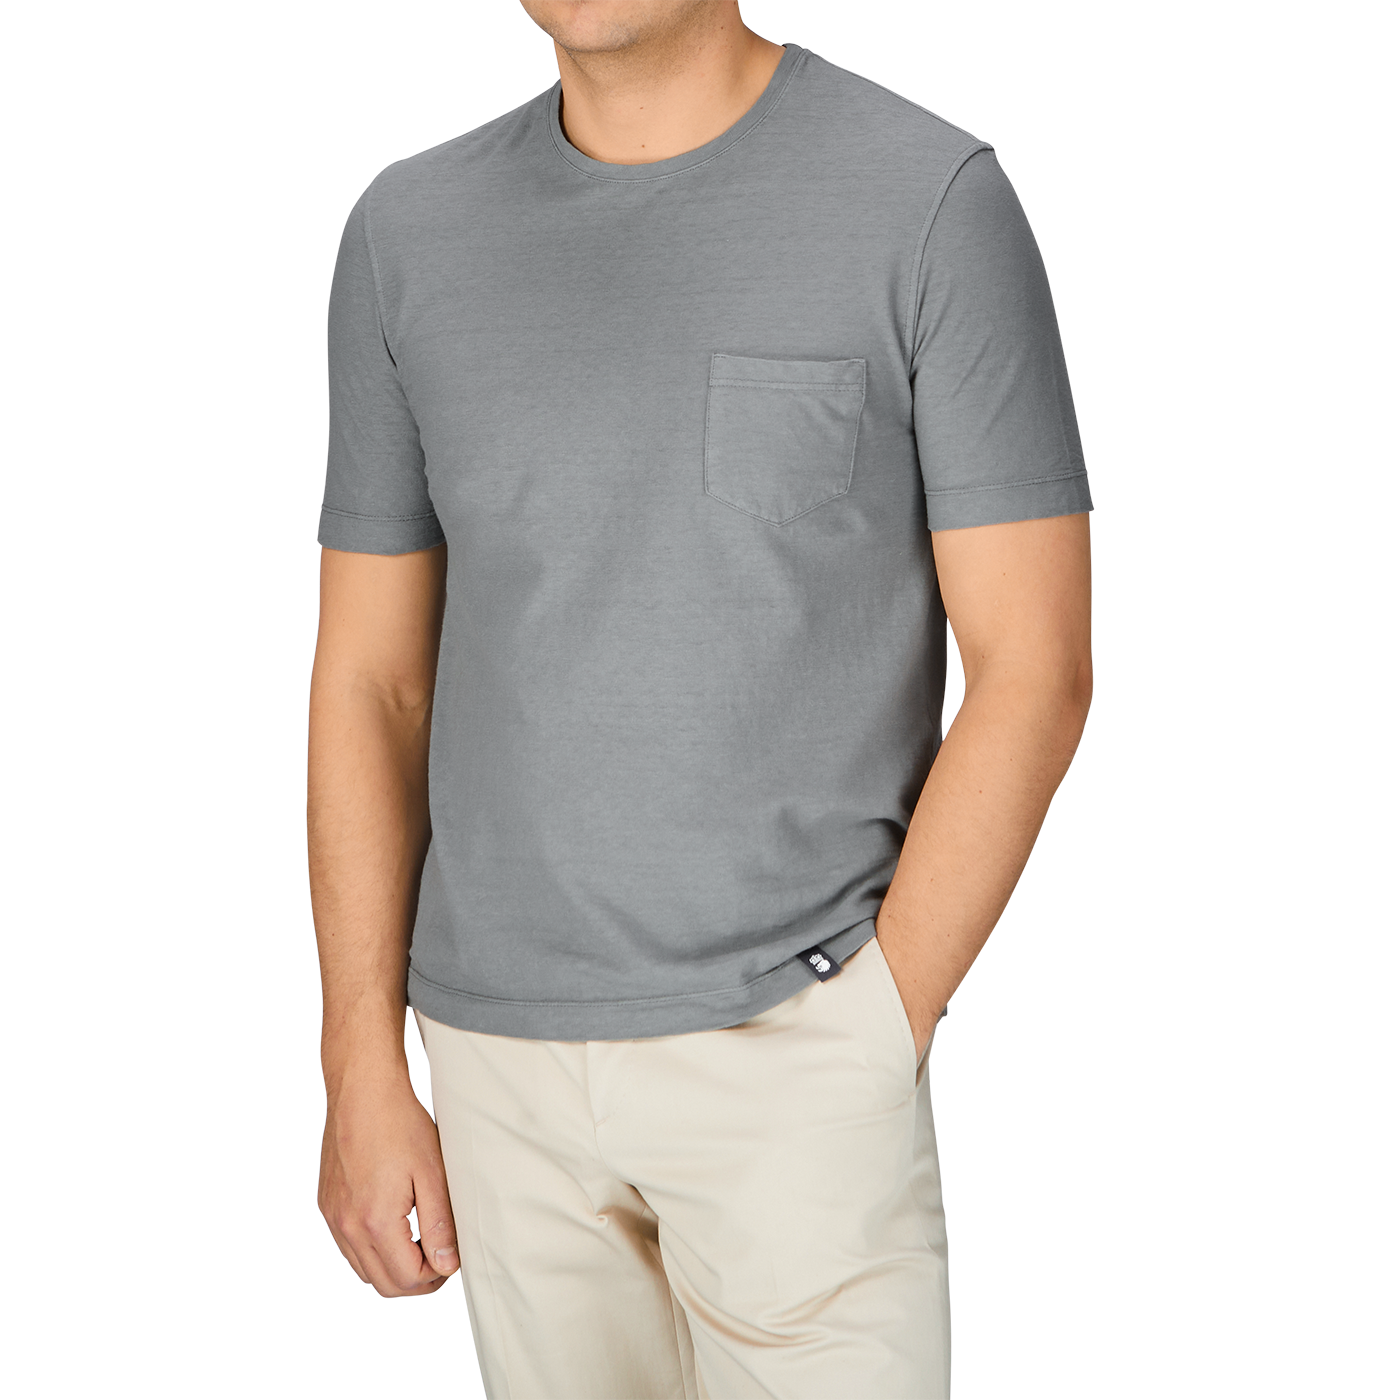 A man wearing a Drumohr Steel Grey Cotton Linen T-Shirt and khaki pants.